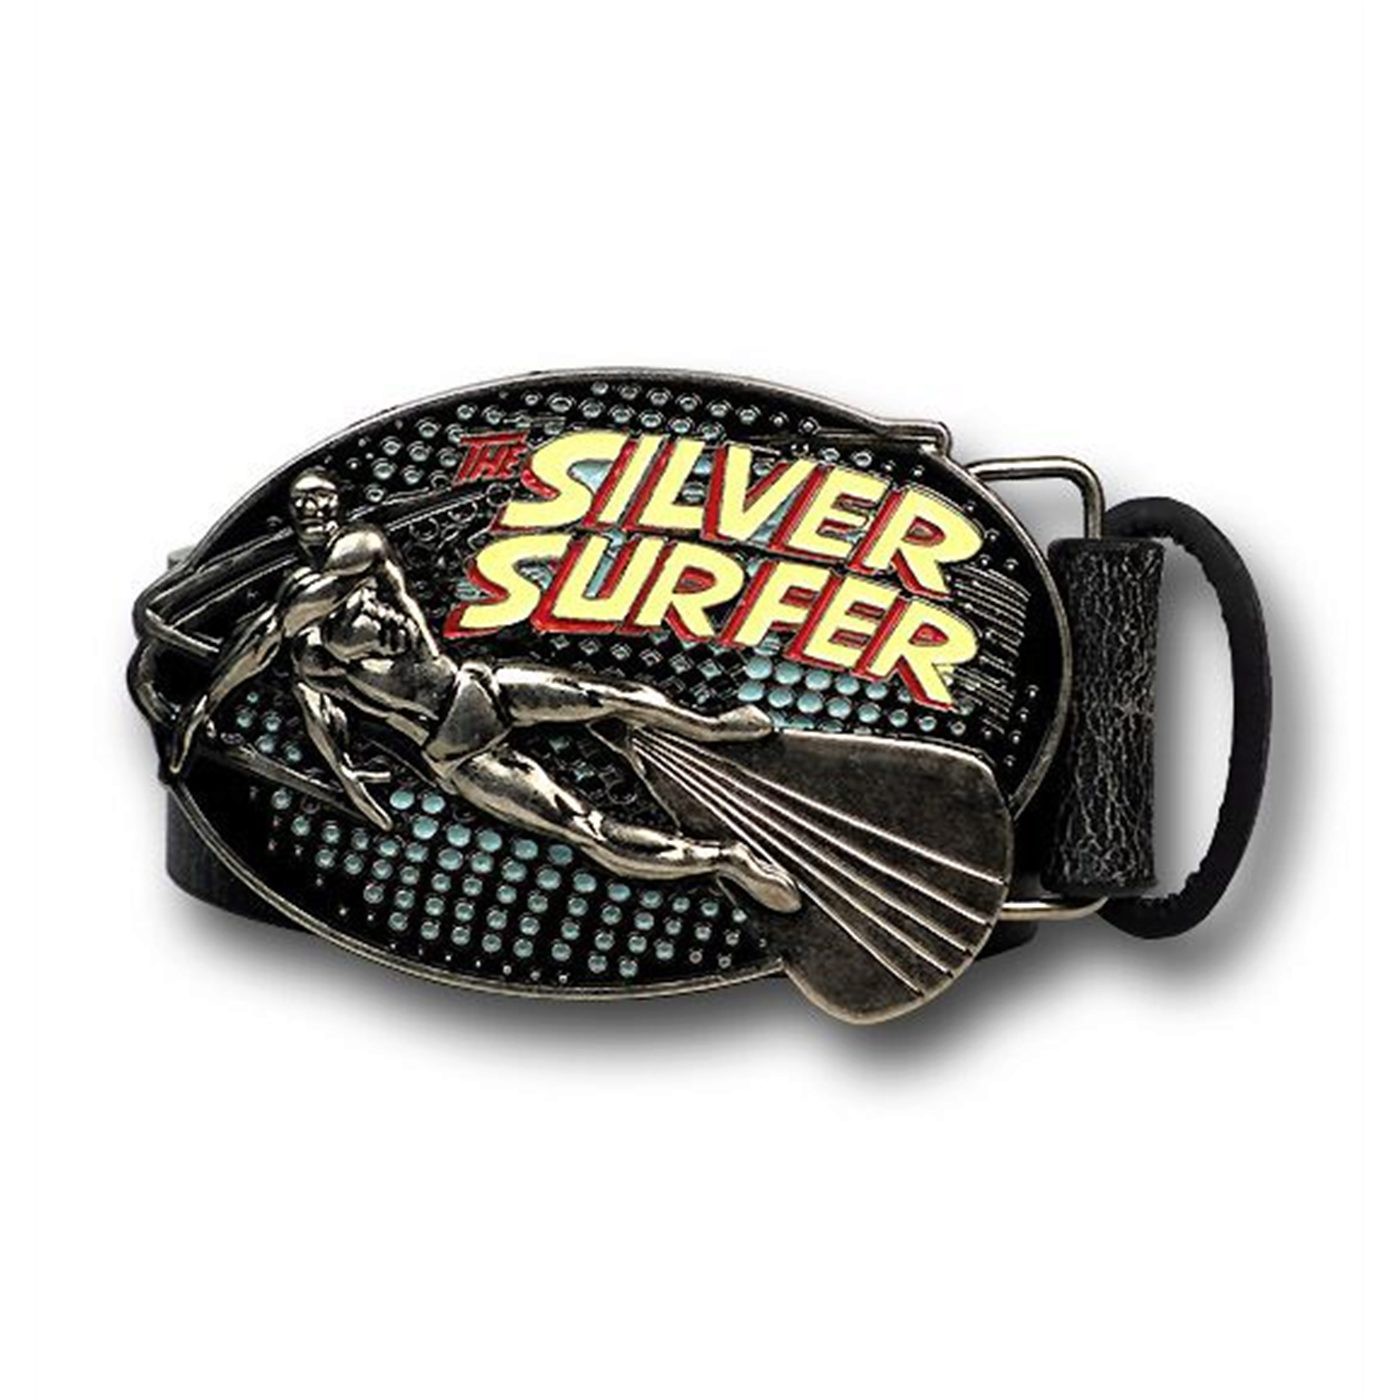 Silver Surfer Star Rider Belt Buckle With Belt